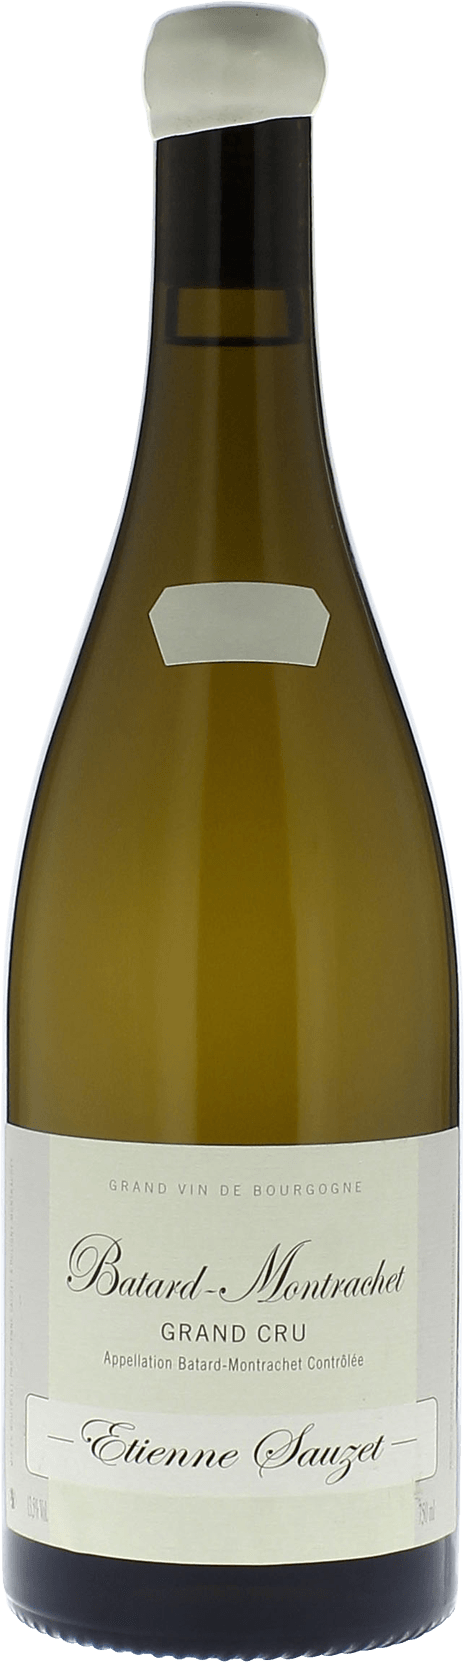 Batard montrachet grand cru 2018 Domaine SAUZET, Bourgogne blanc